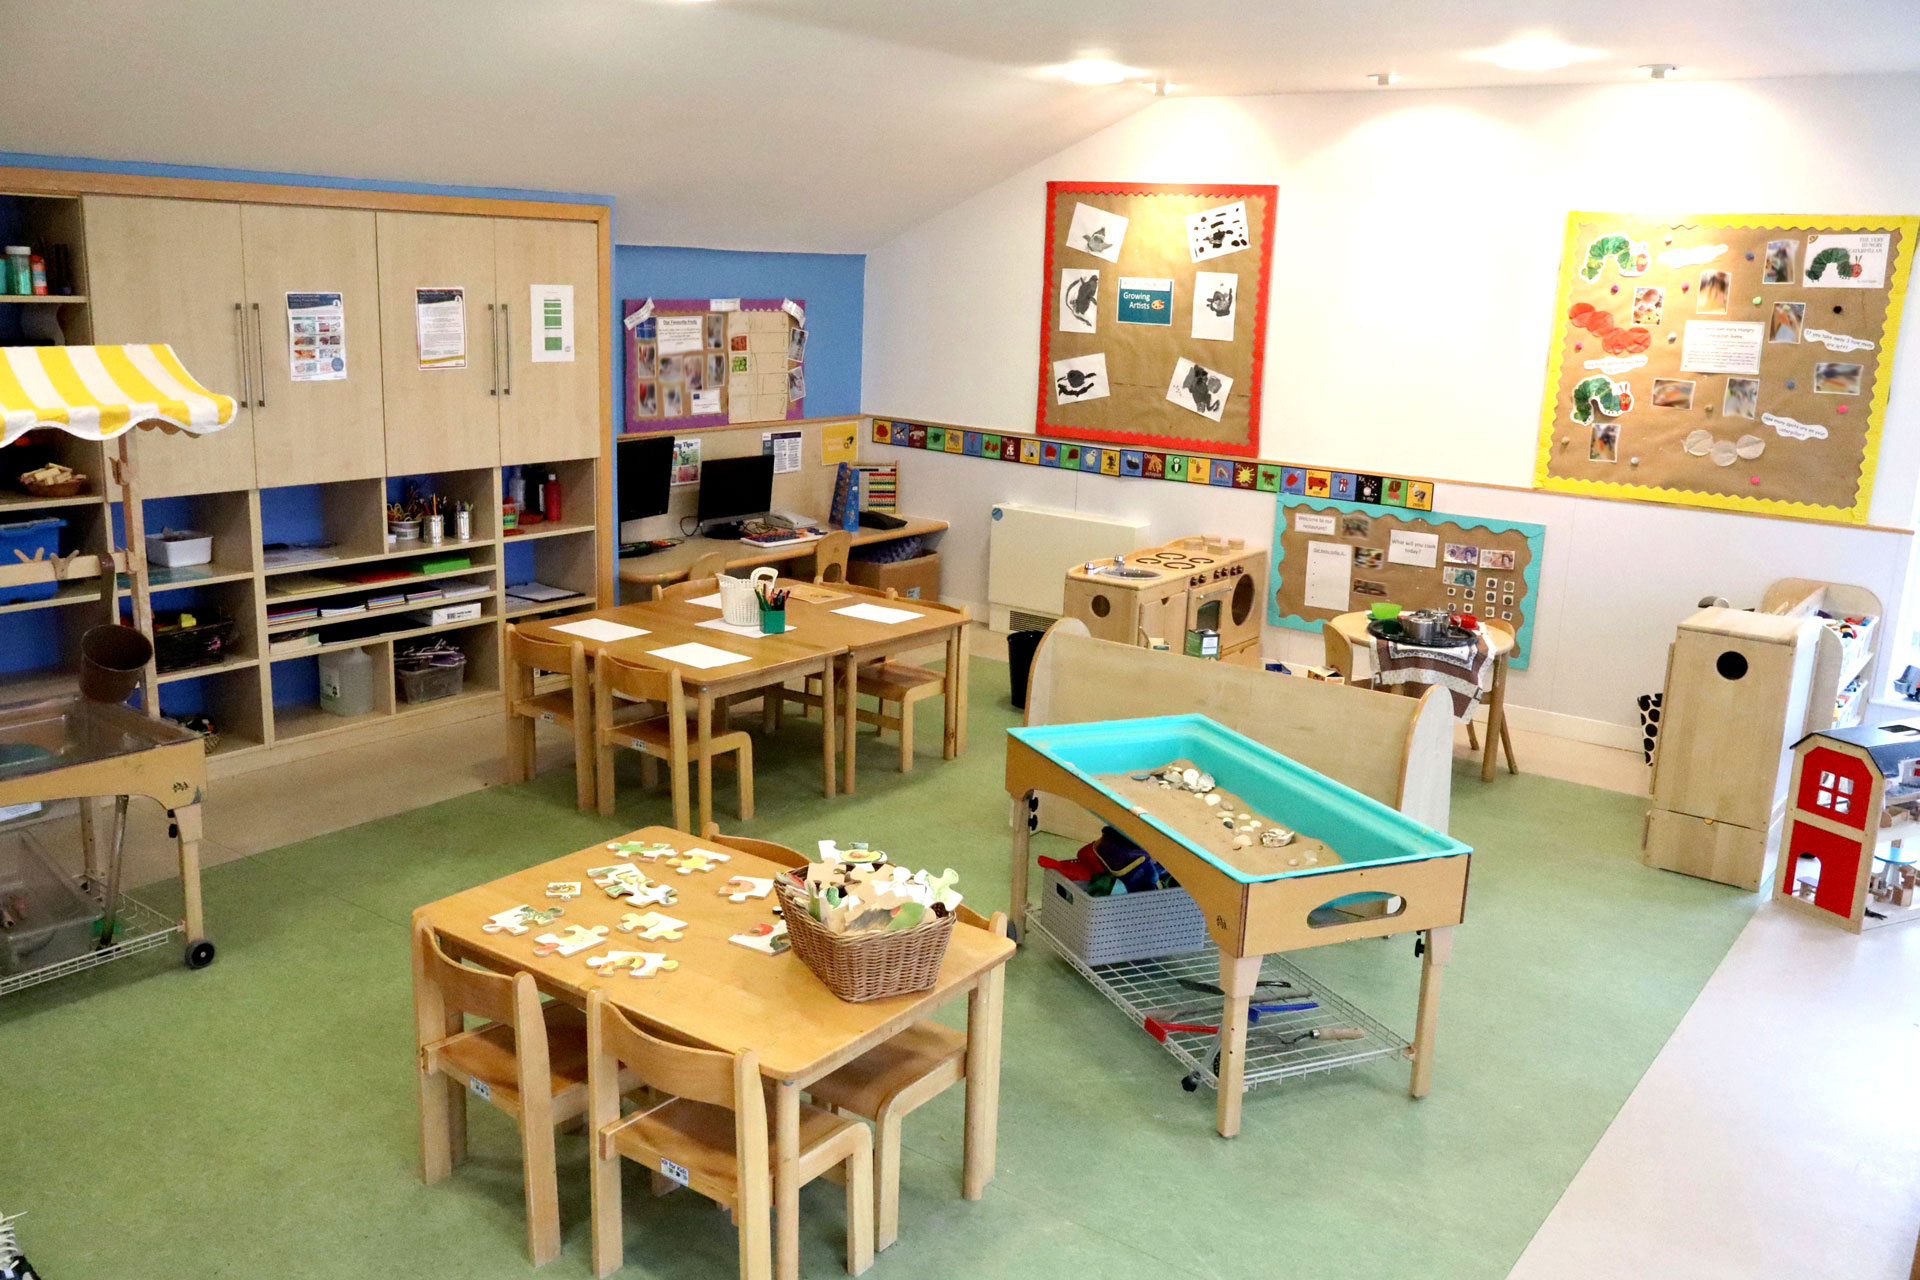 Timperley Day Nursery and Preschool nursery room